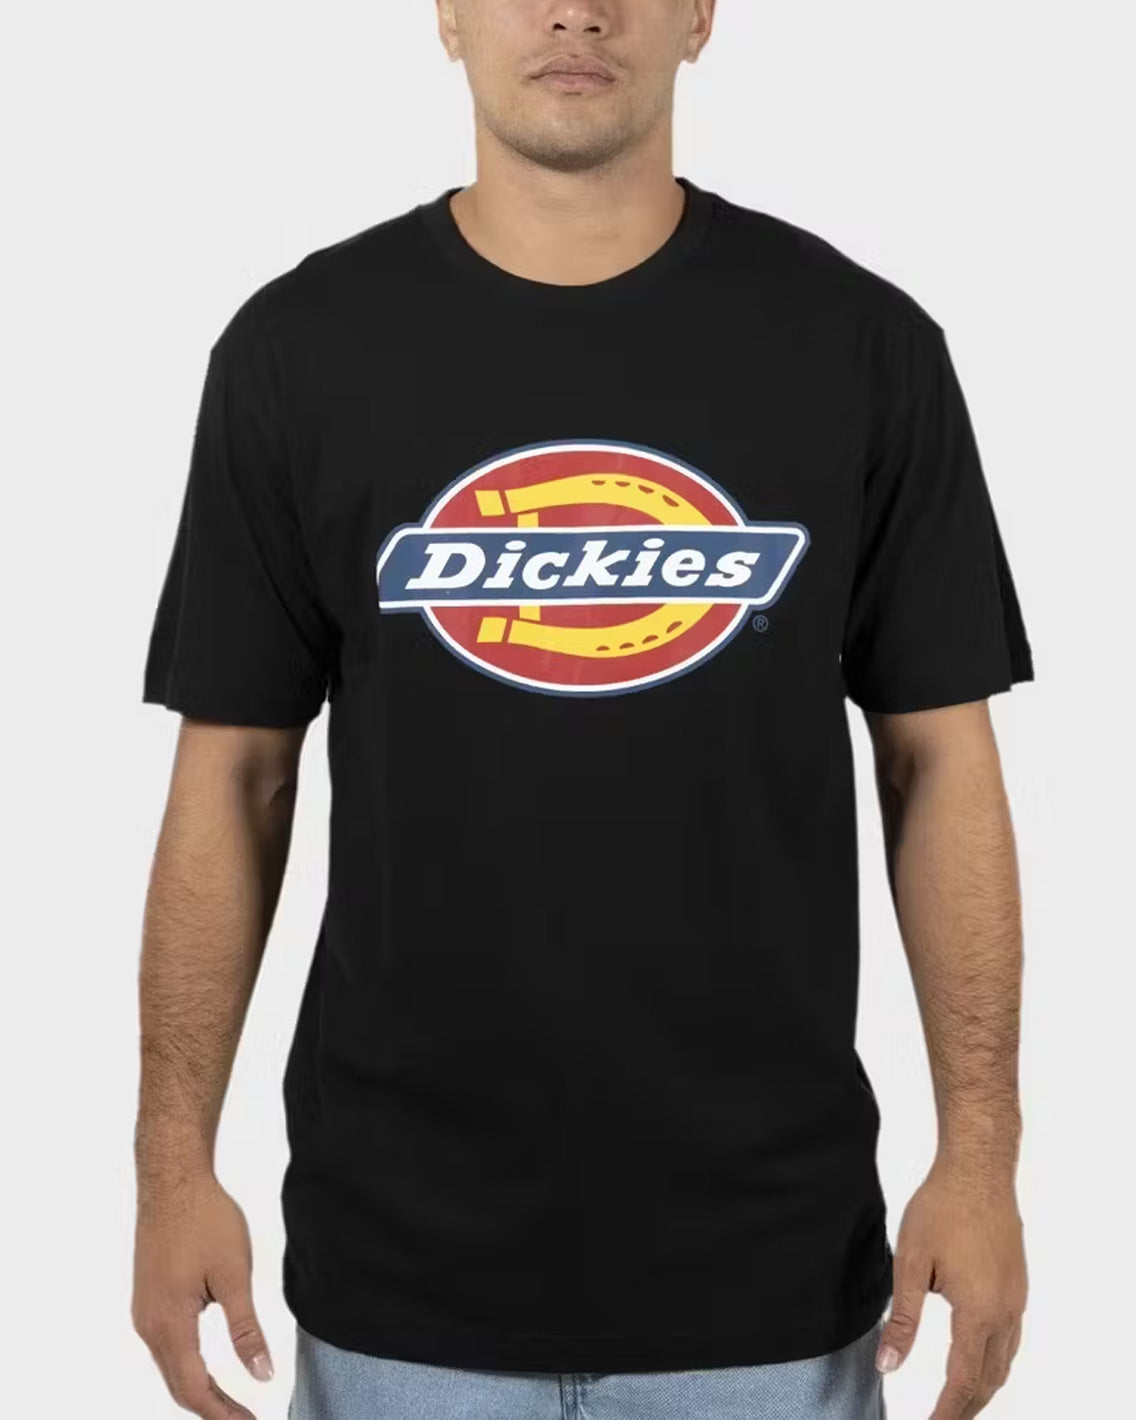 Dickies - H.S Classic Tee - Black